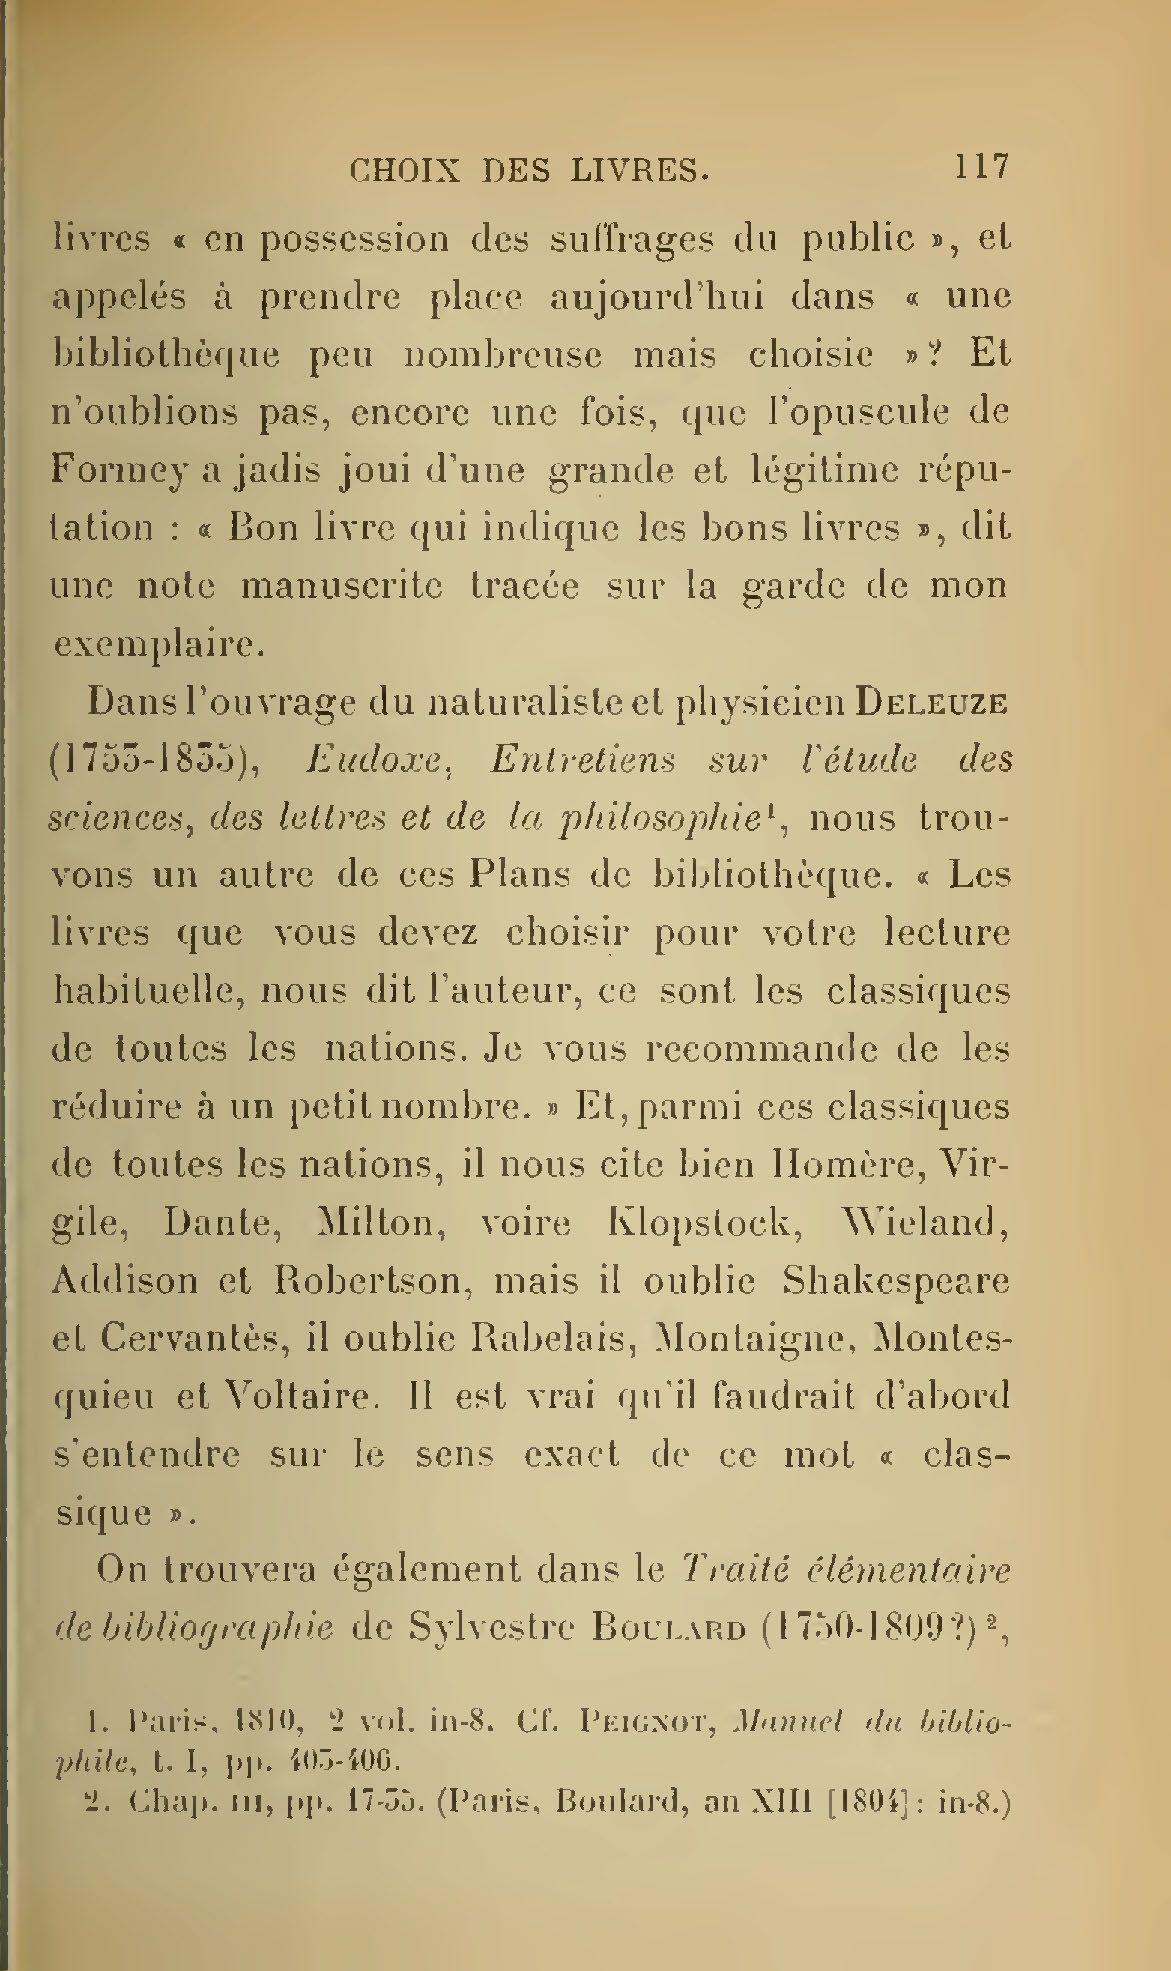 Albert Cim, Le Livre, t. II, p. 117.